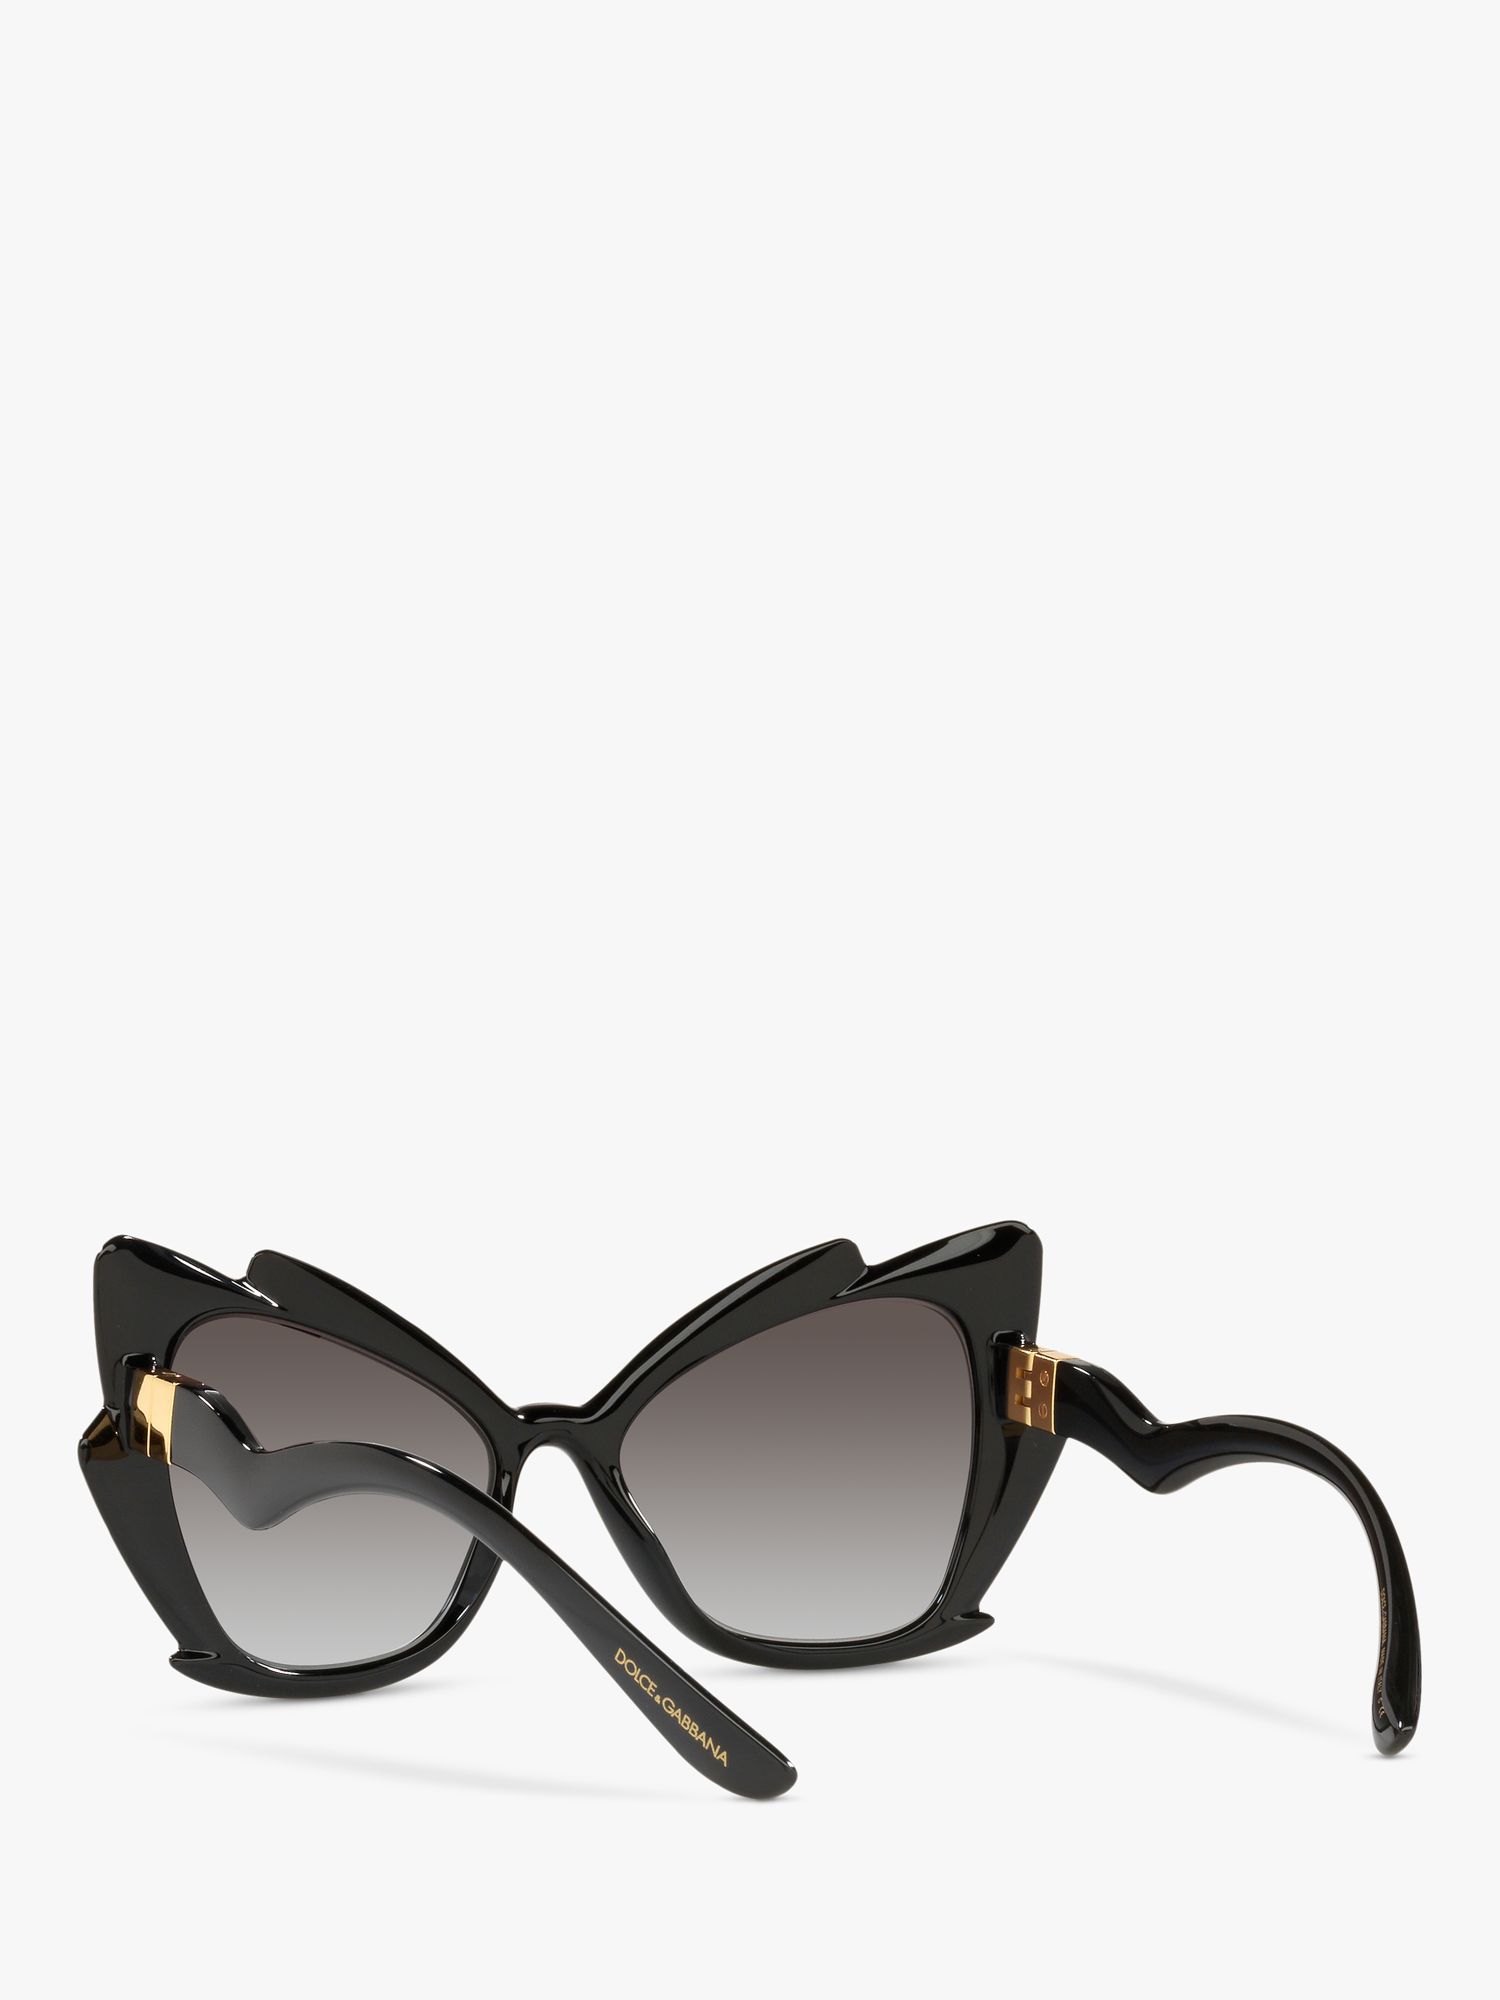 Dolce & Gabbana DG6166 Women's Cat's Eye Sunglasses, Black/Grey Gradient at  John Lewis & Partners